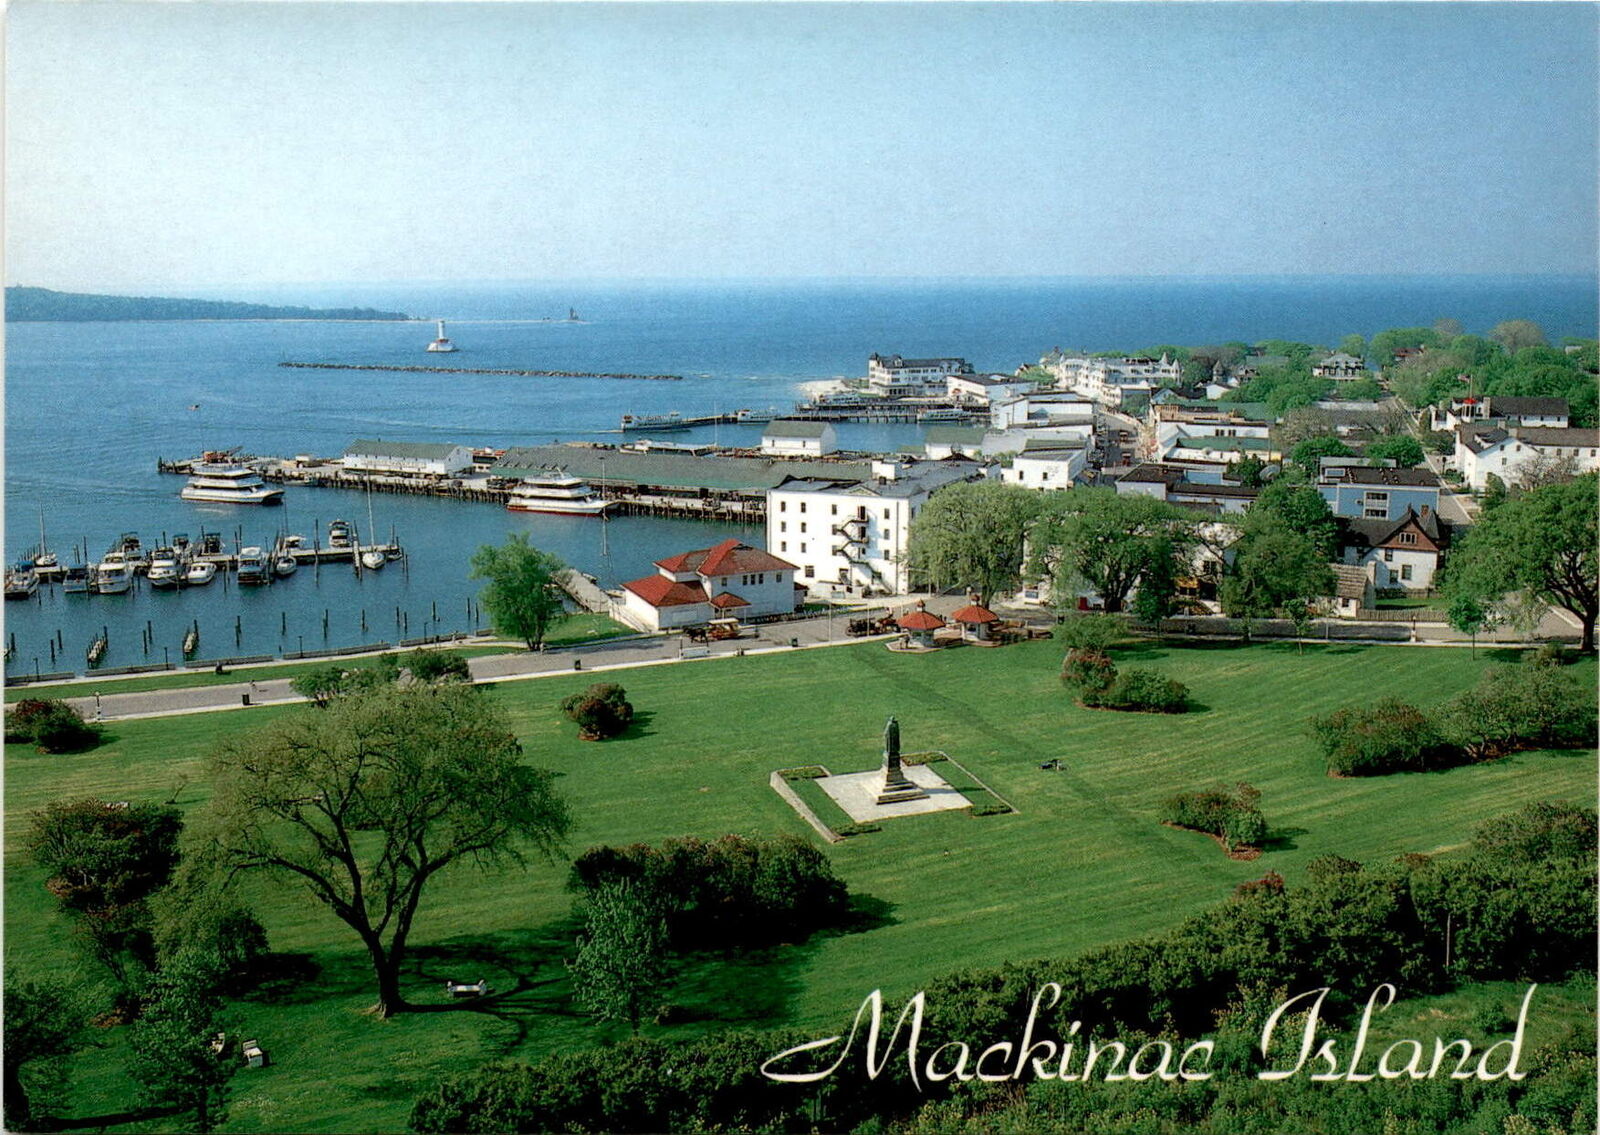 Vintage Mackinac Island Postcard - No Motorized Vehicles